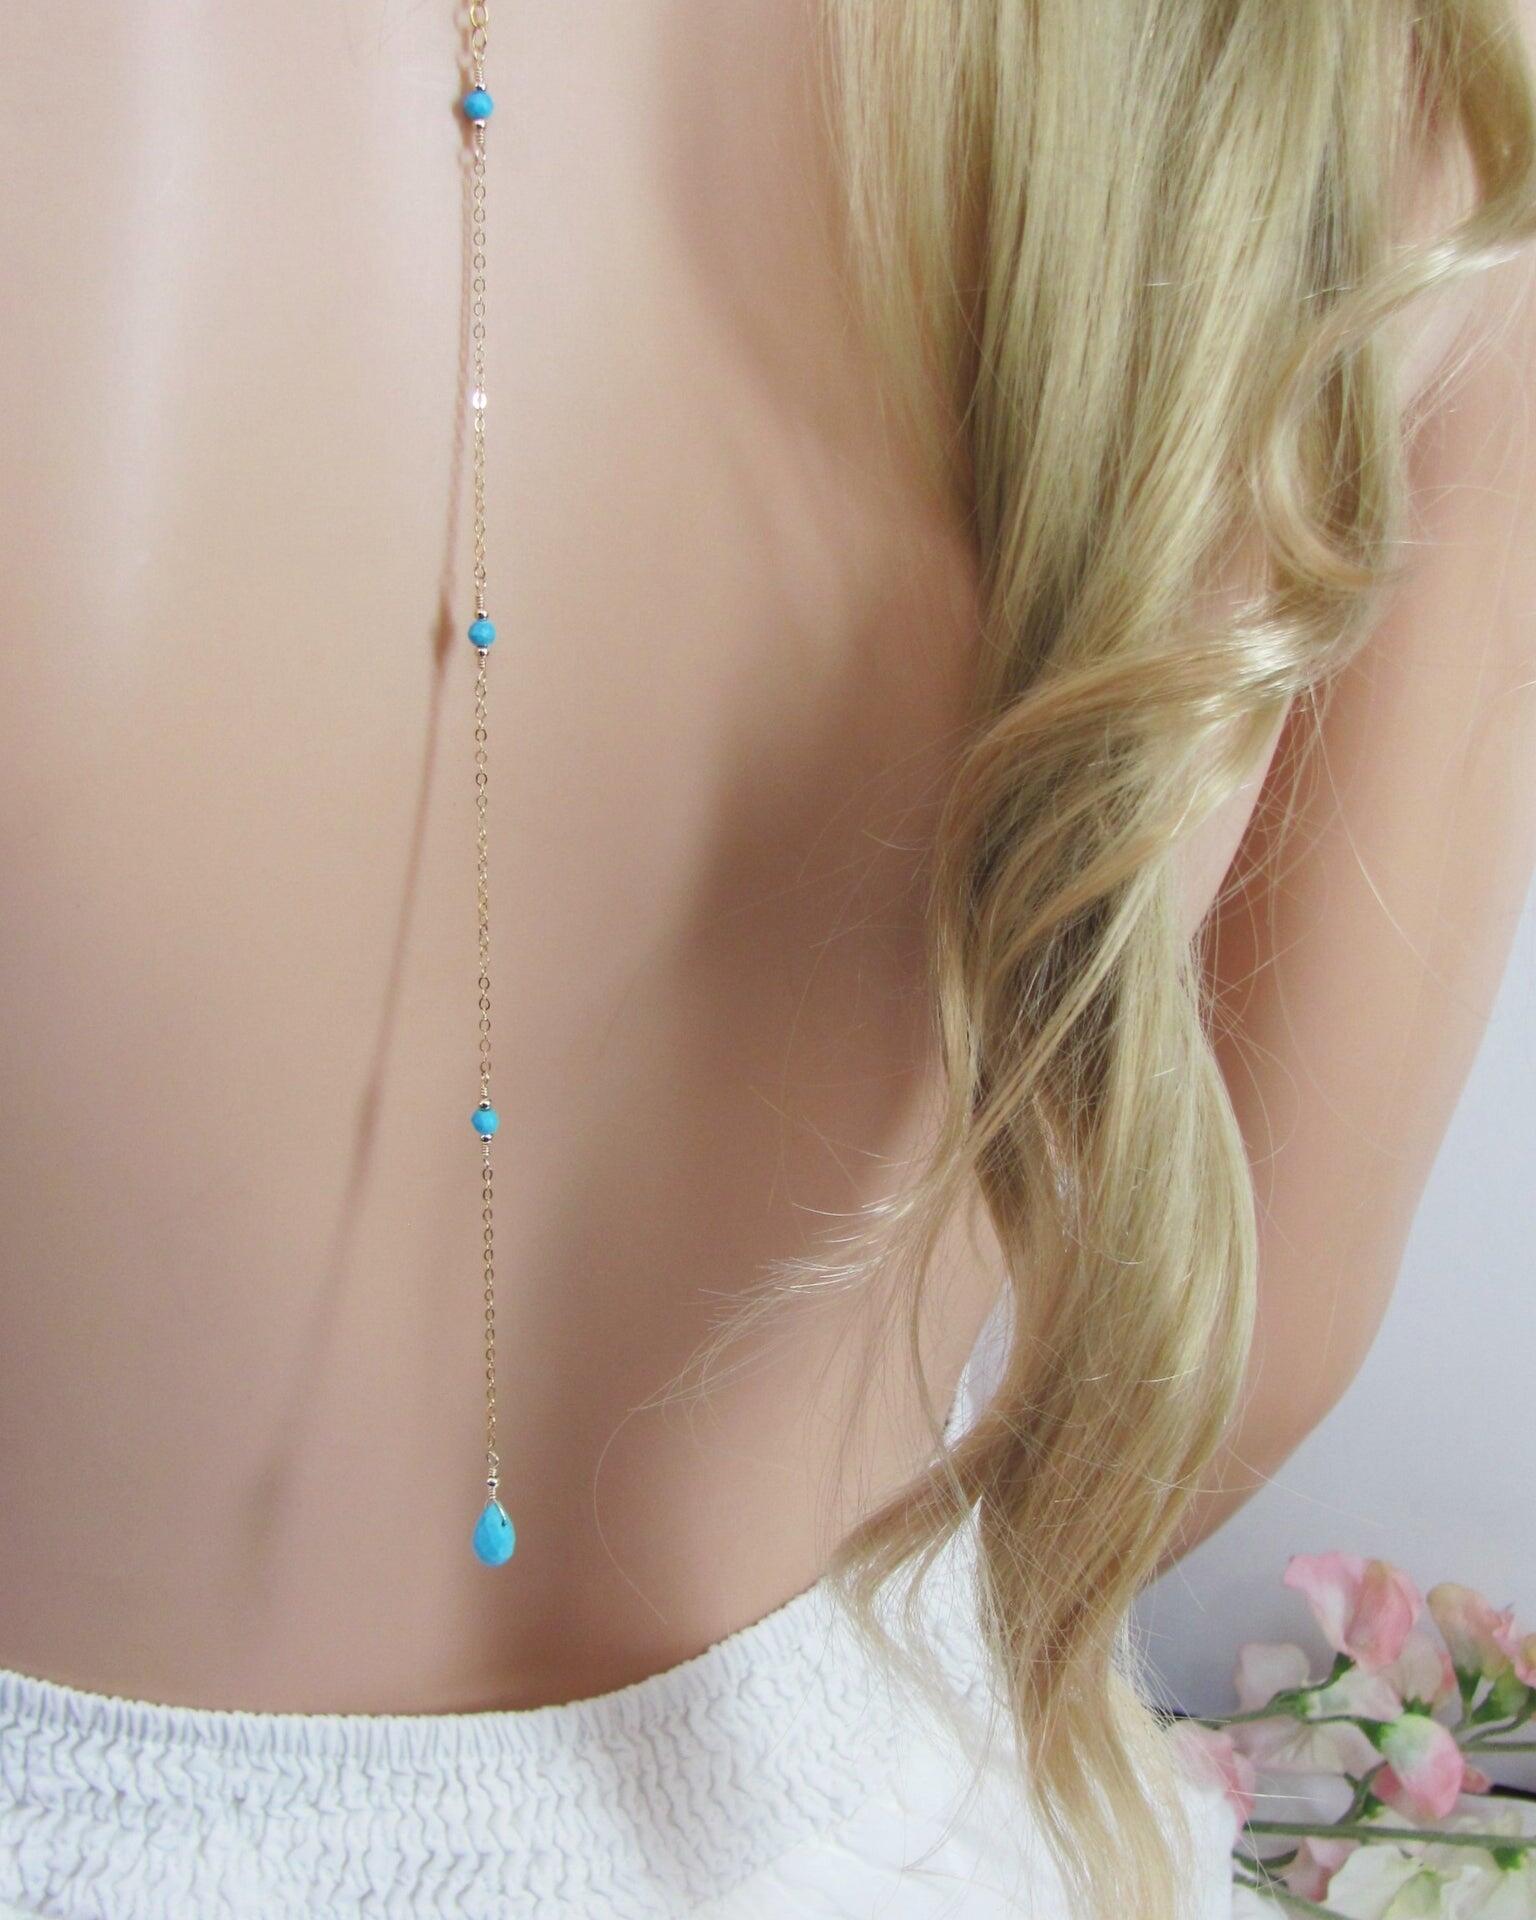 Bridal Backdrop Necklace with Turquoise Gemstones